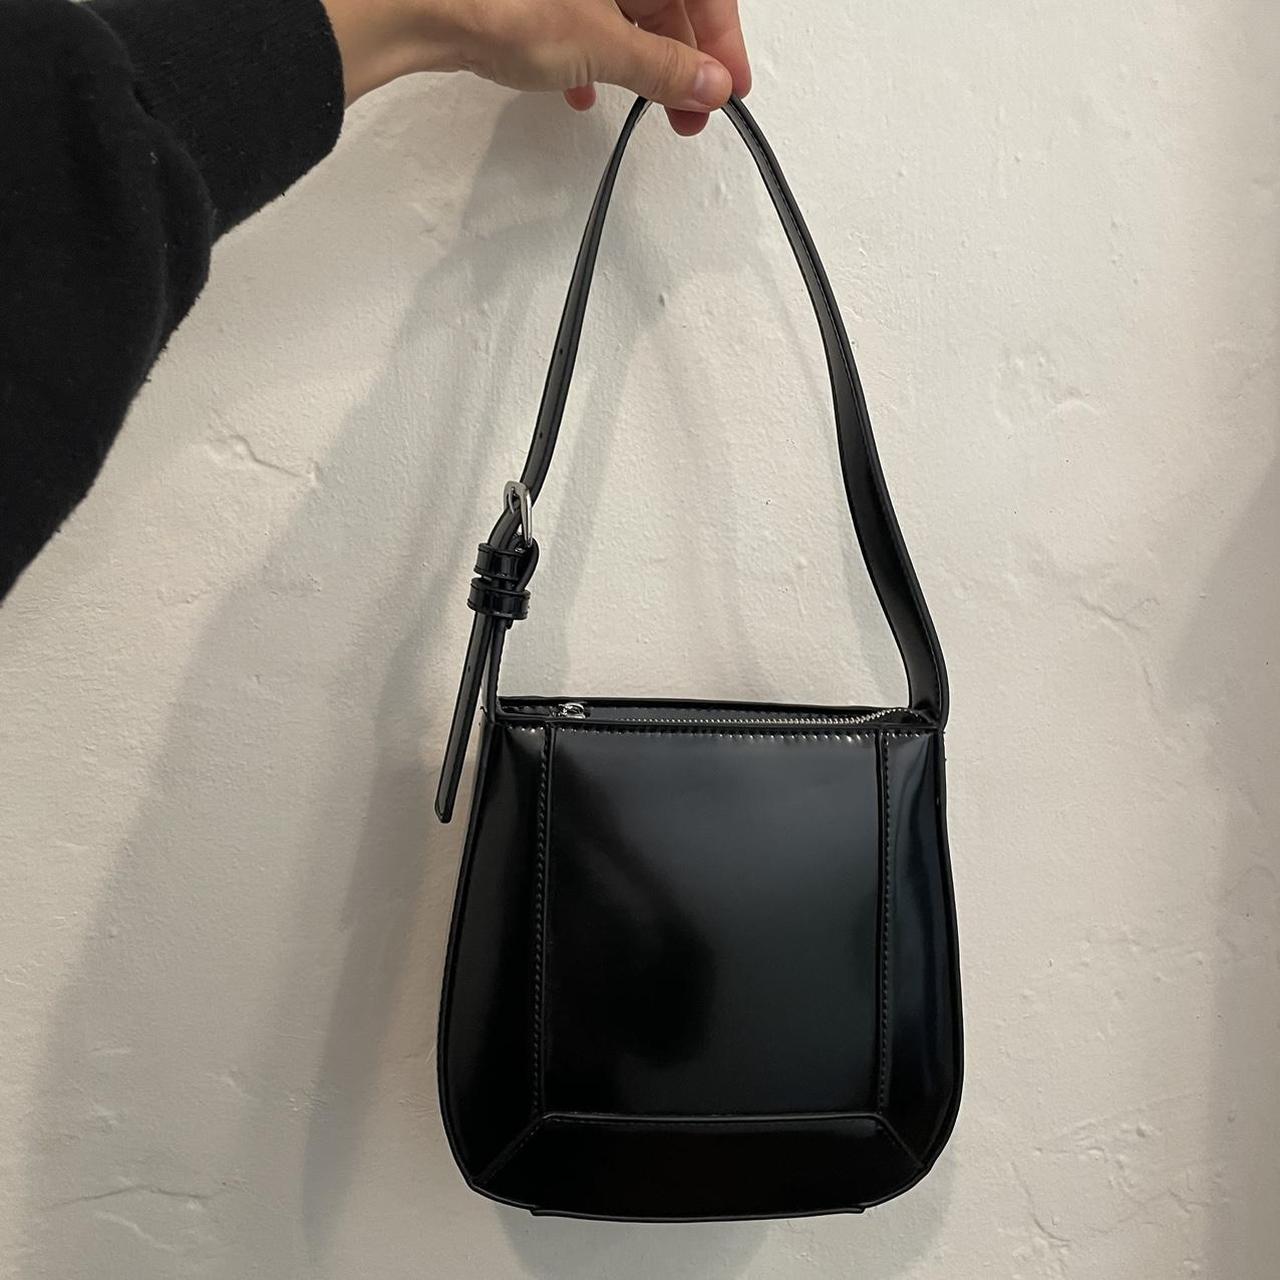 Brand new shiny black purse from Zara, never used it. - Depop